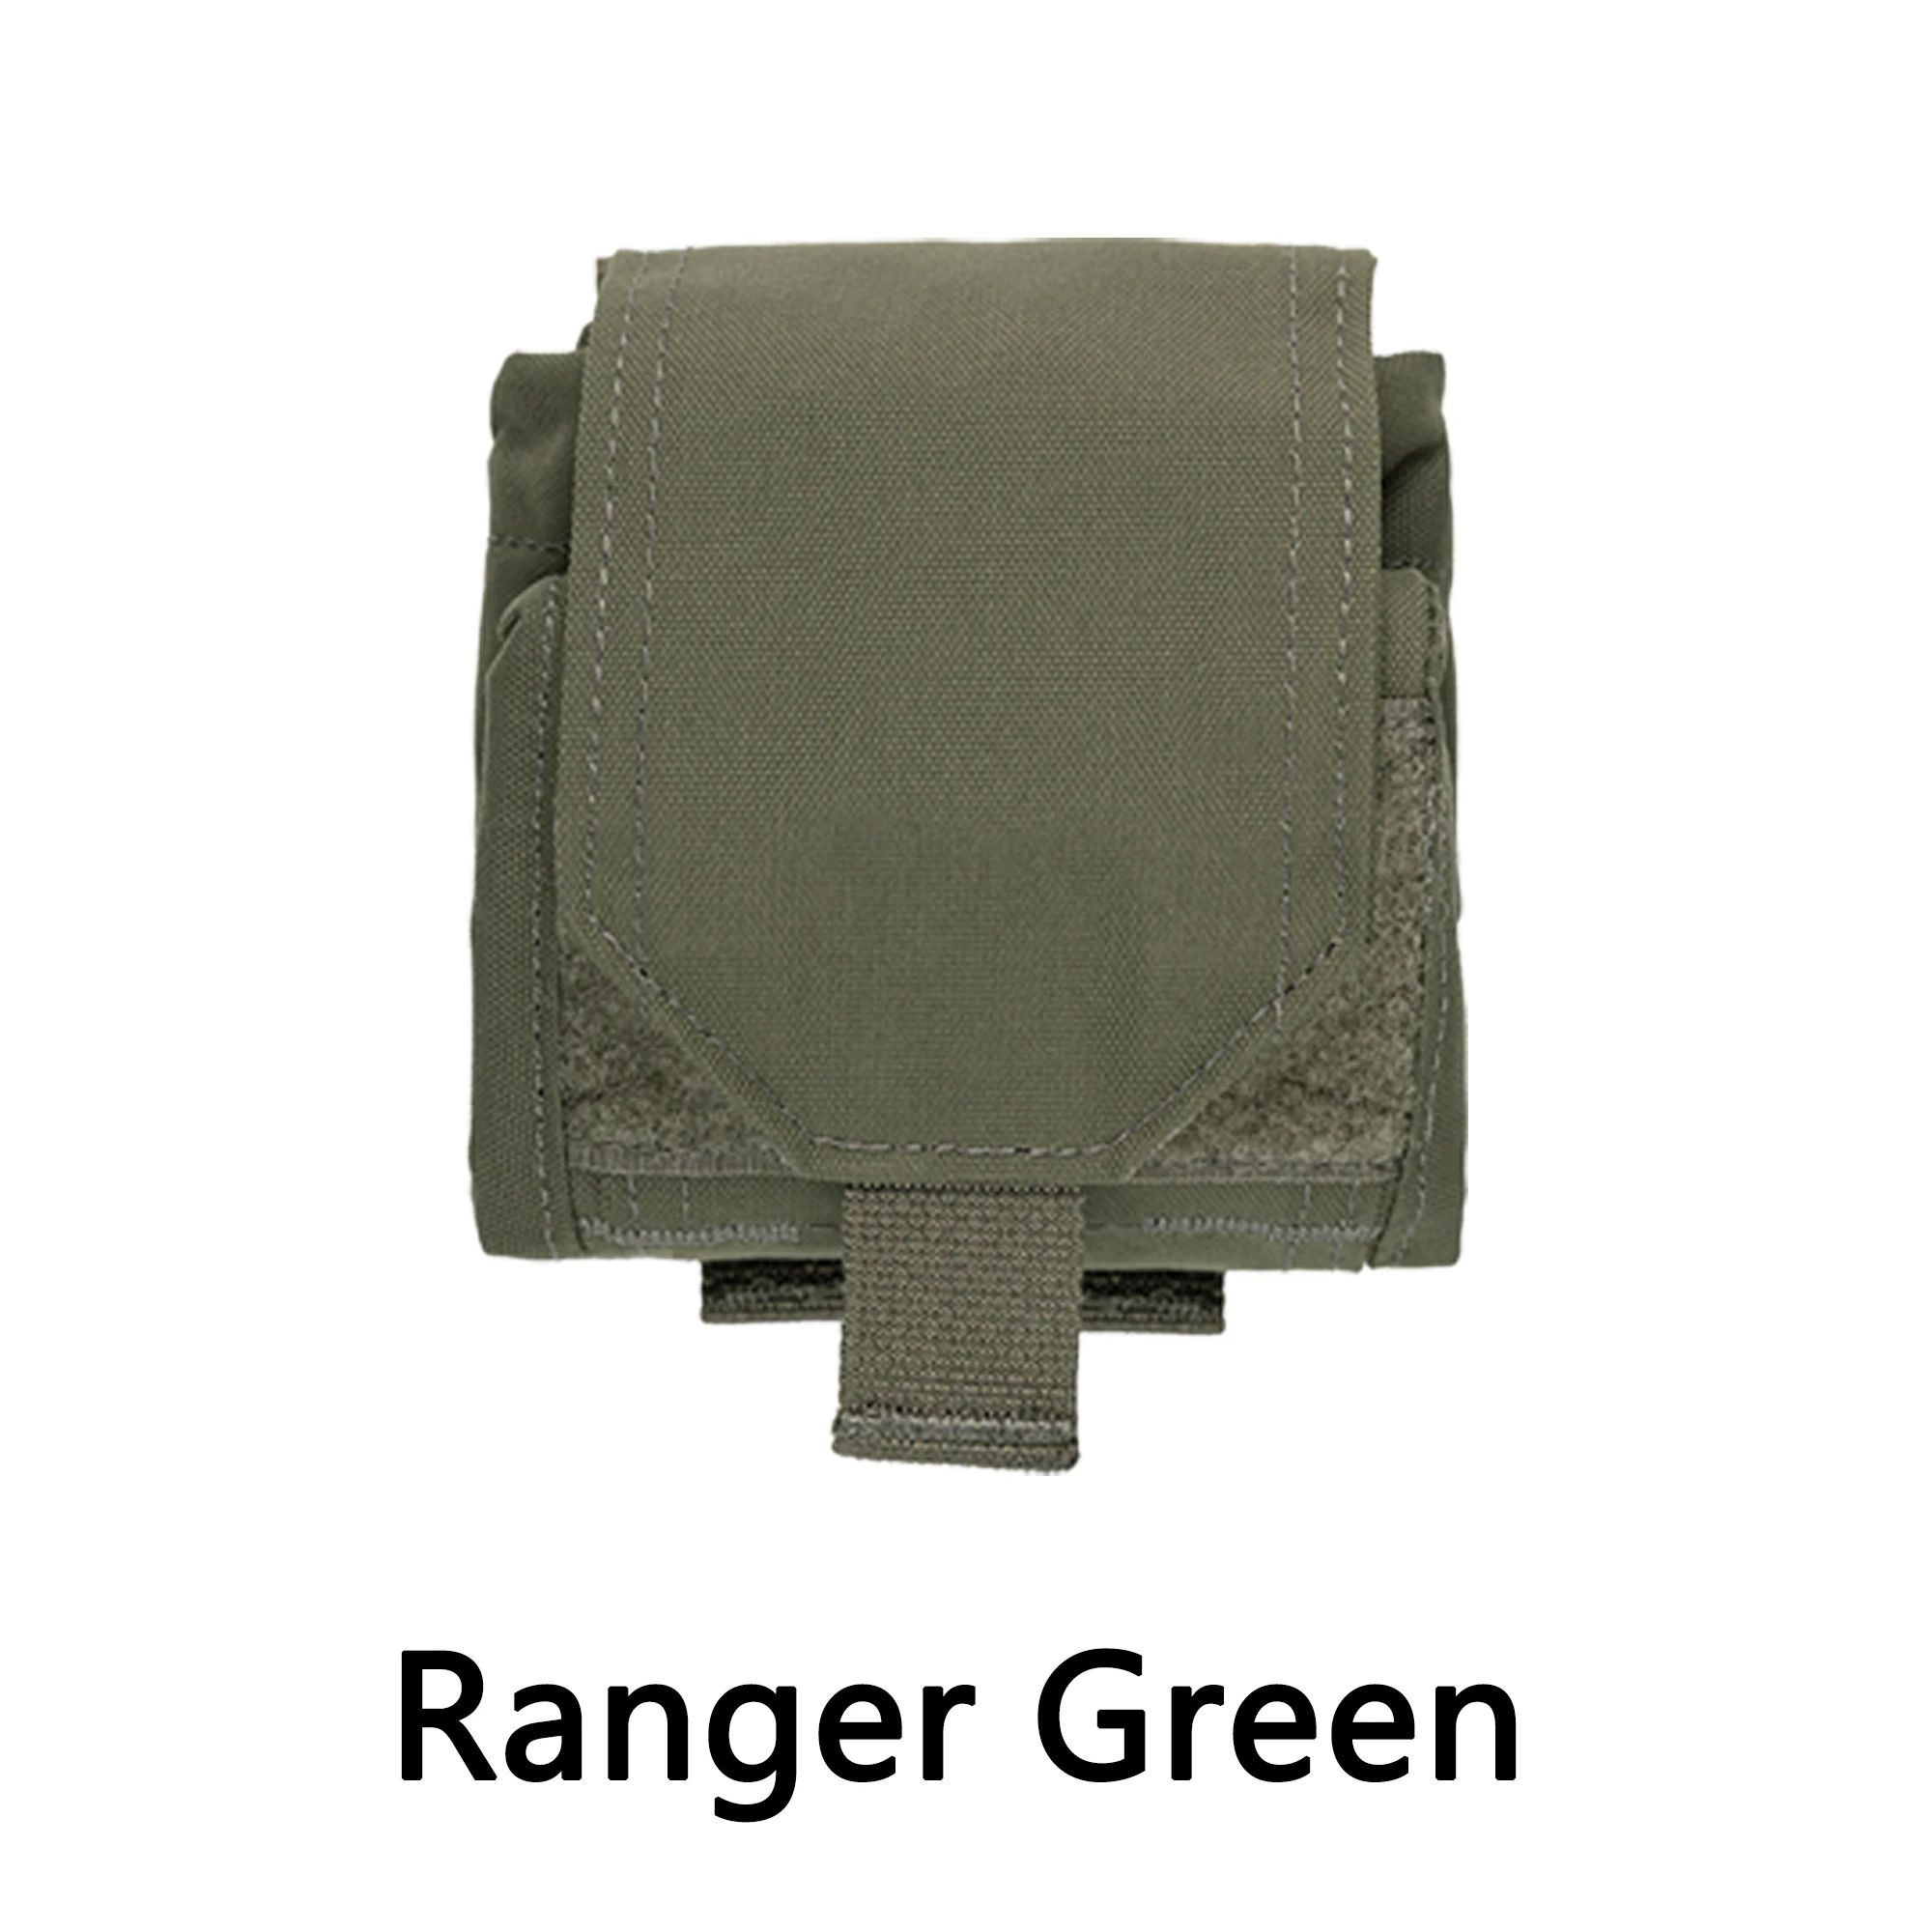 Color:Ranger Green